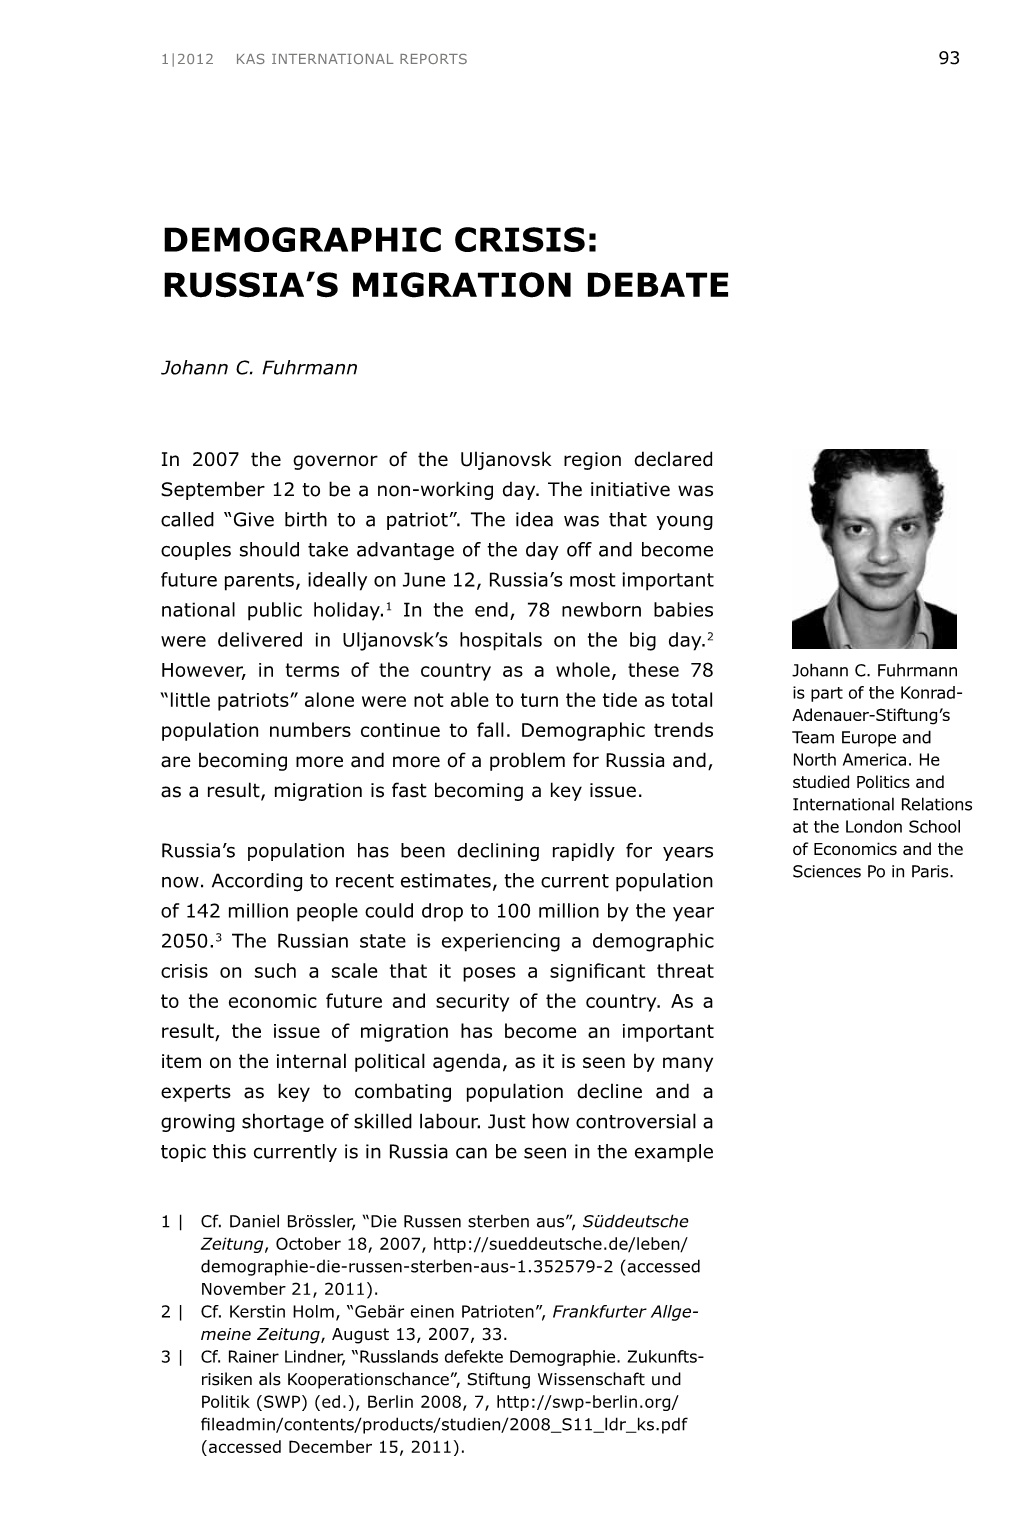 Demographic Crisis: Russia's Migration Debate